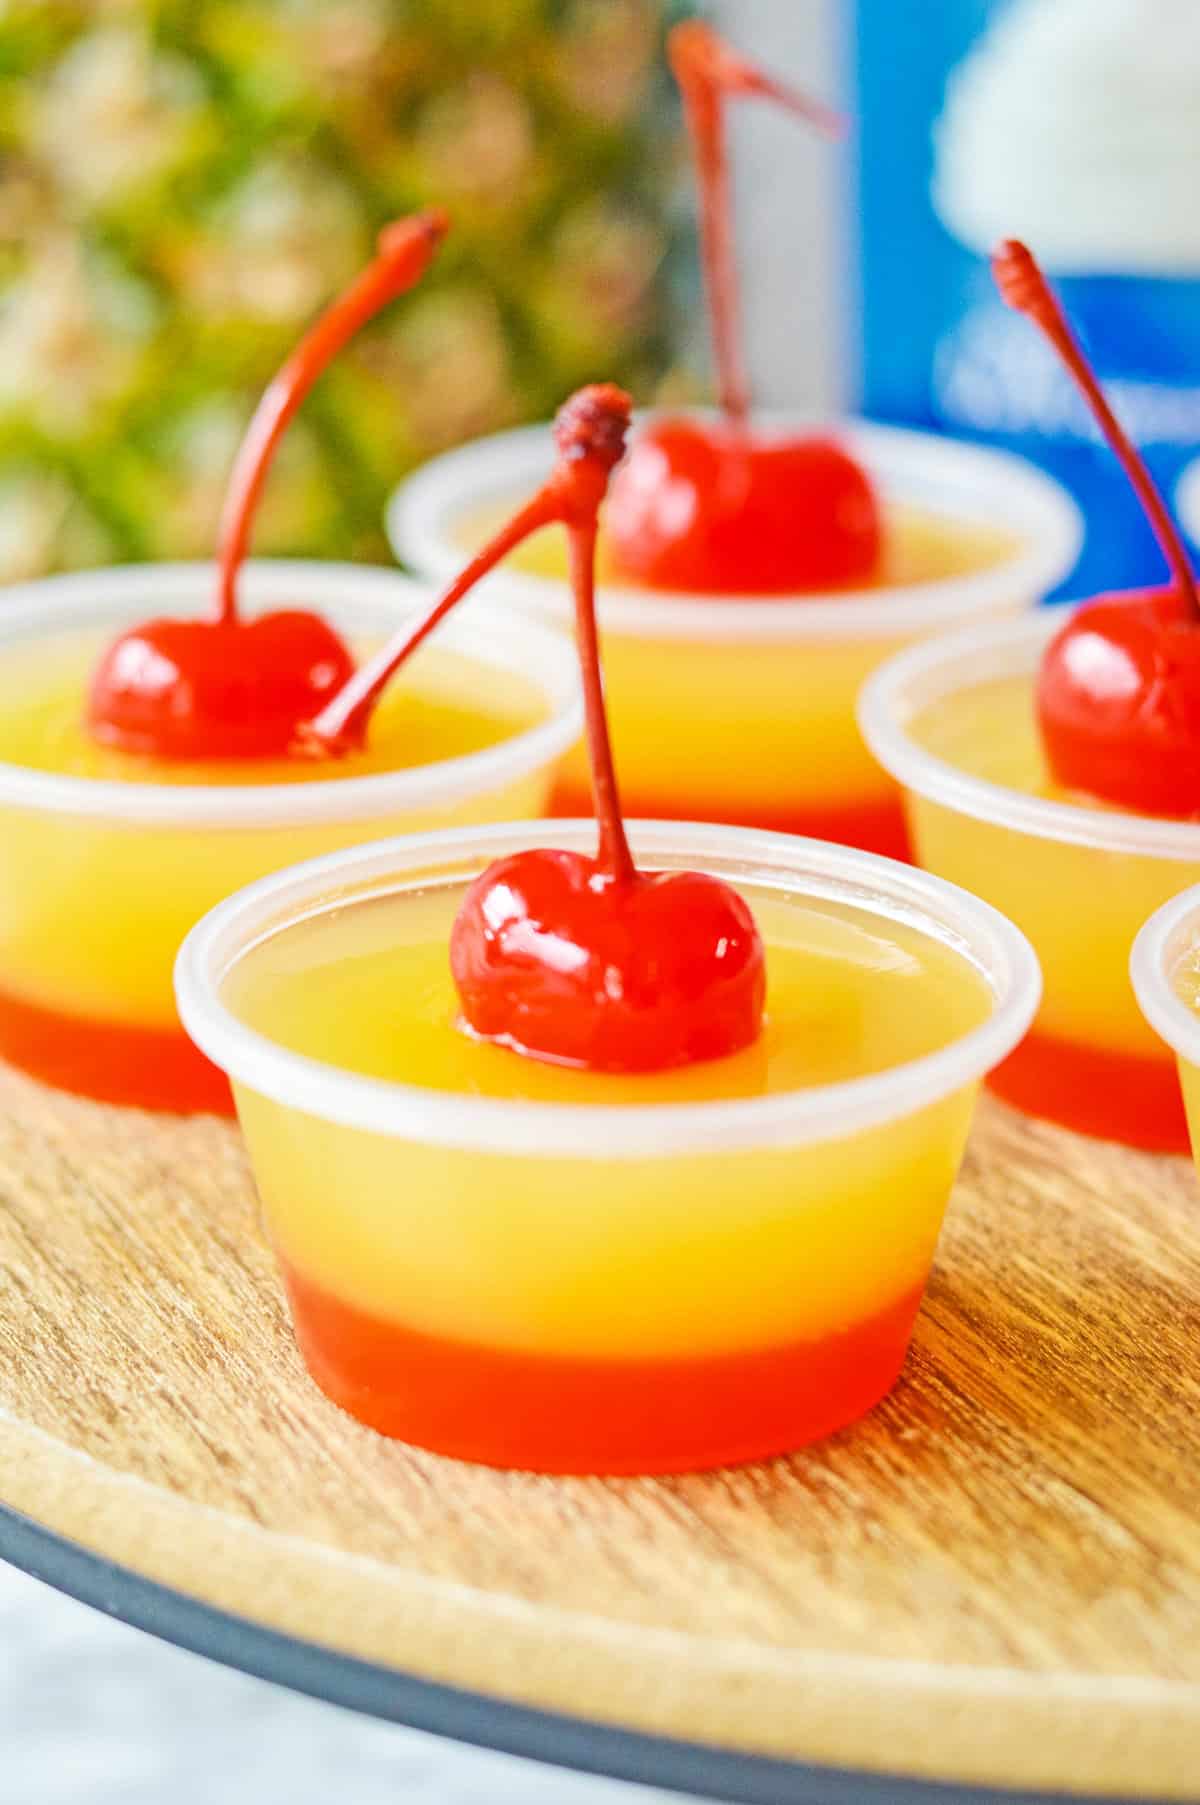 Cherry topped pineapple upside down jello shots.